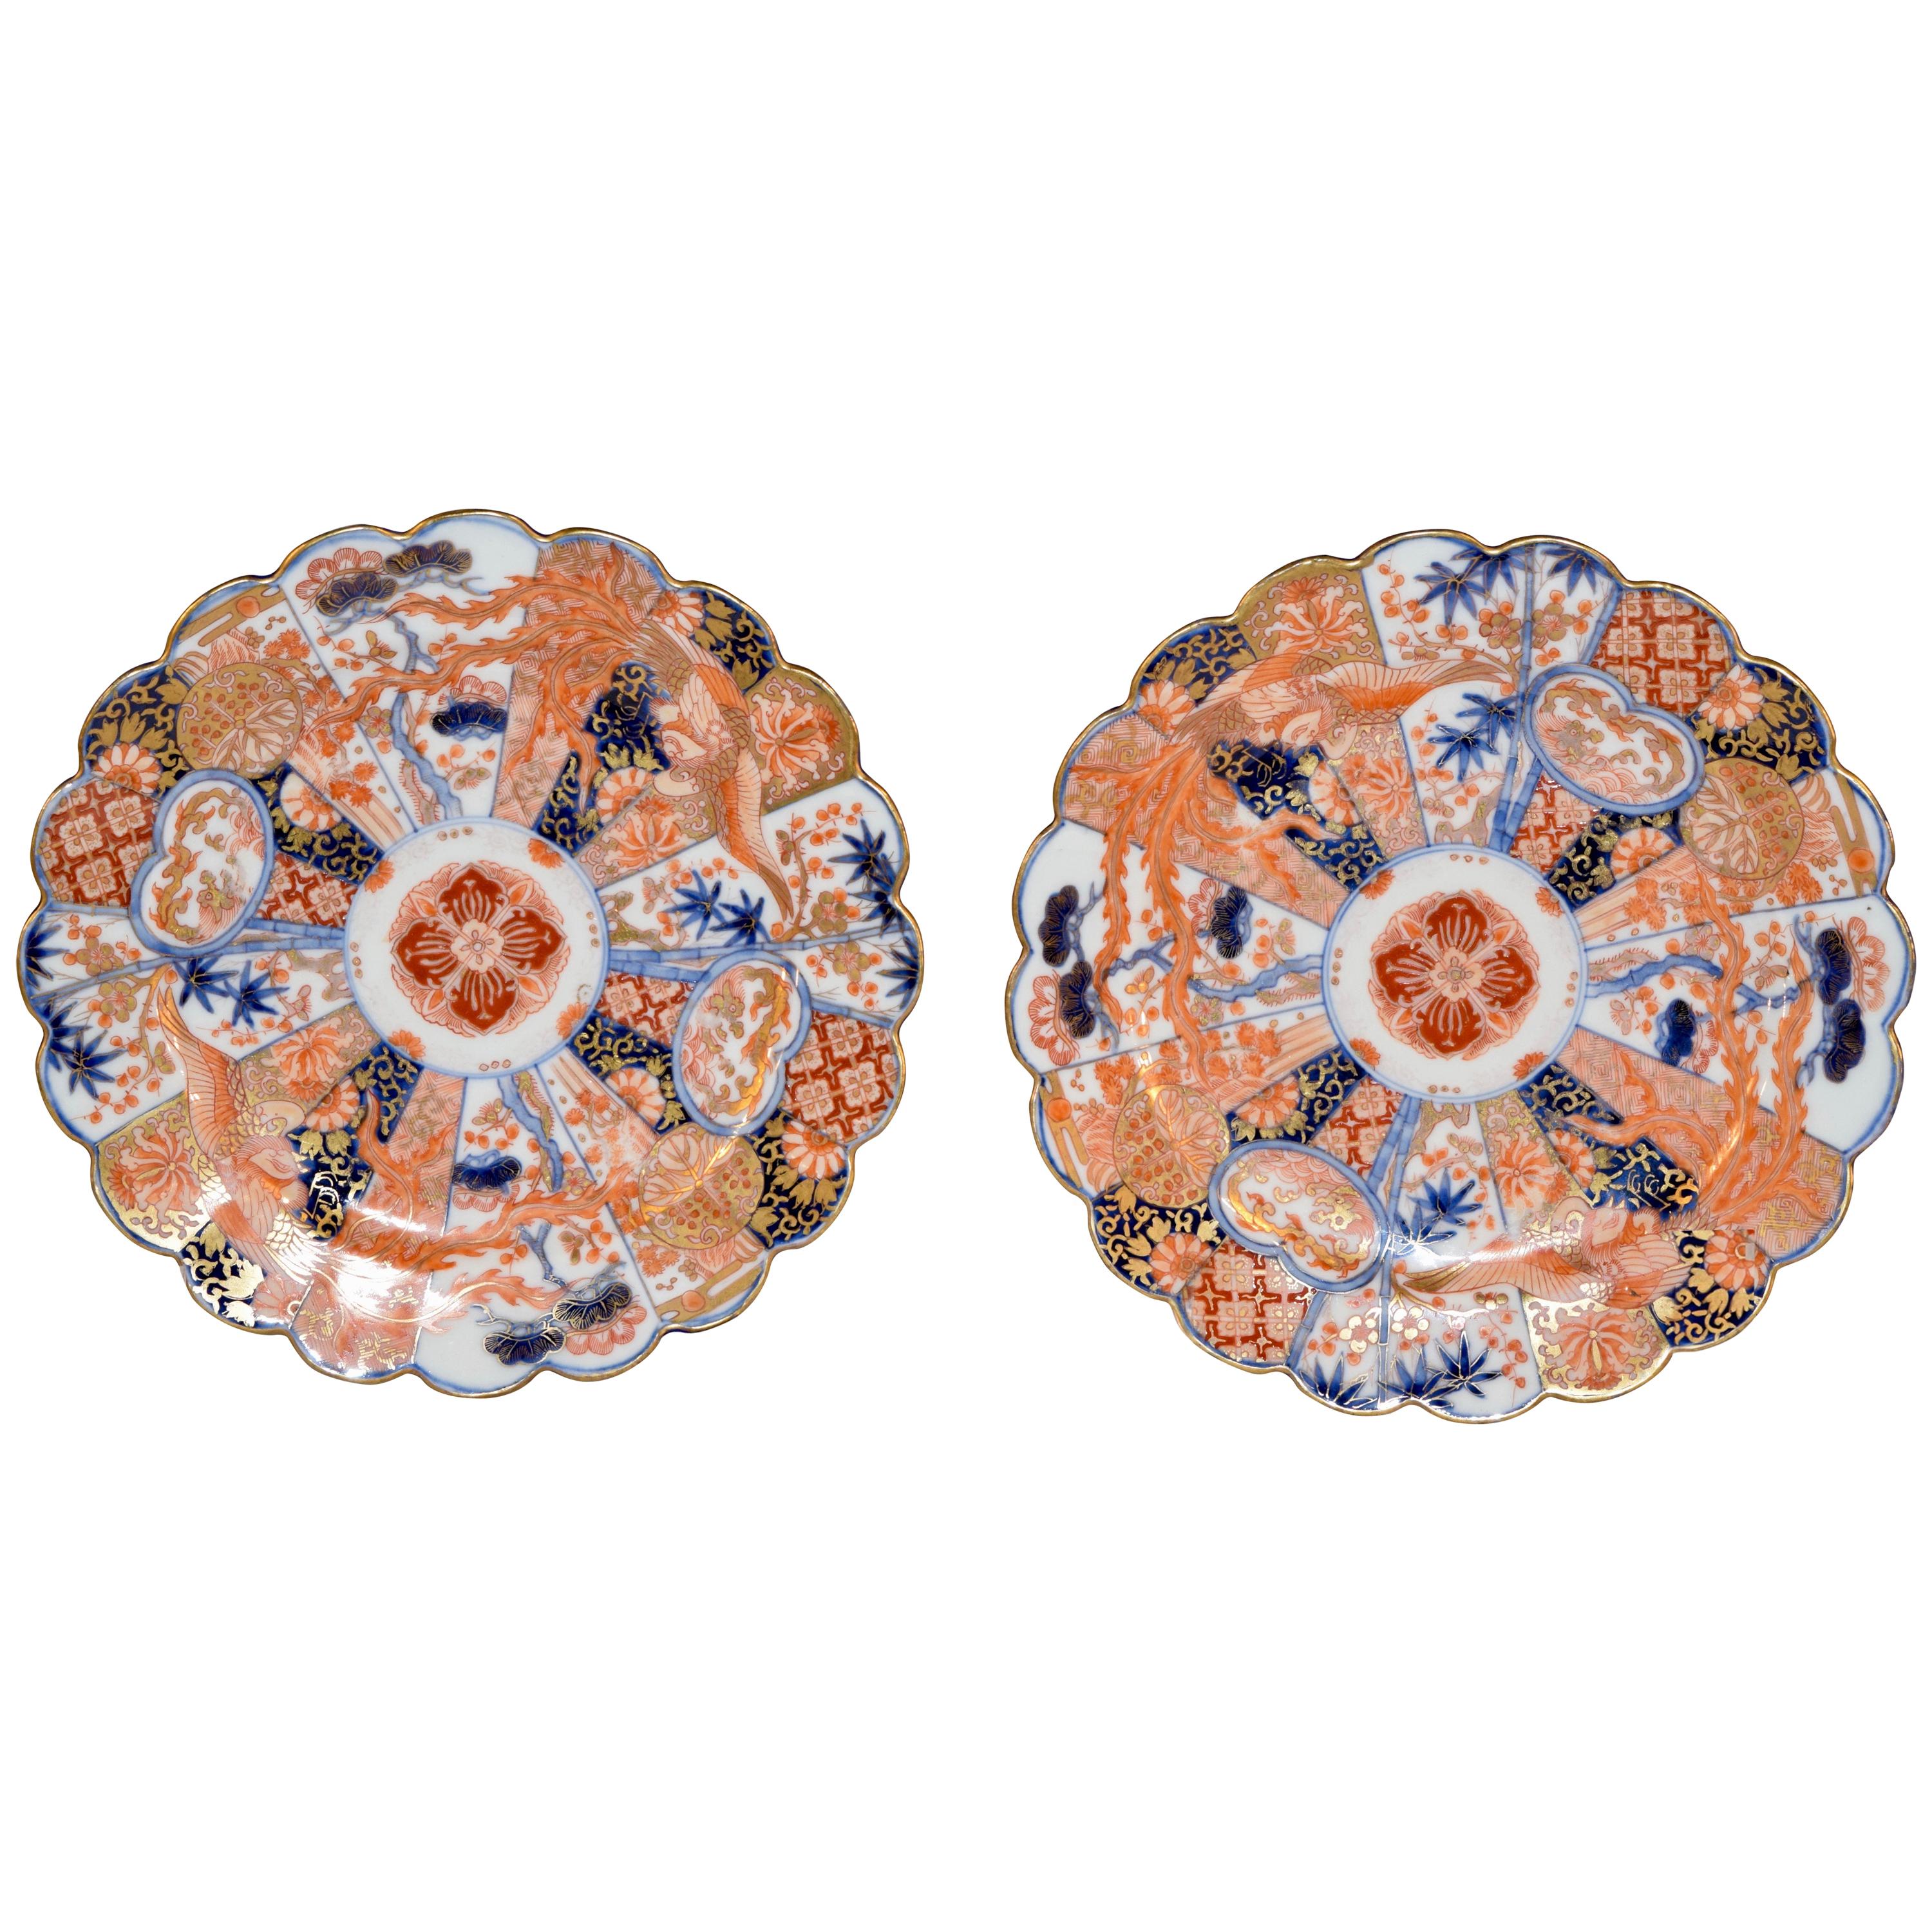 Pair of Late 19th Century Imari Plates